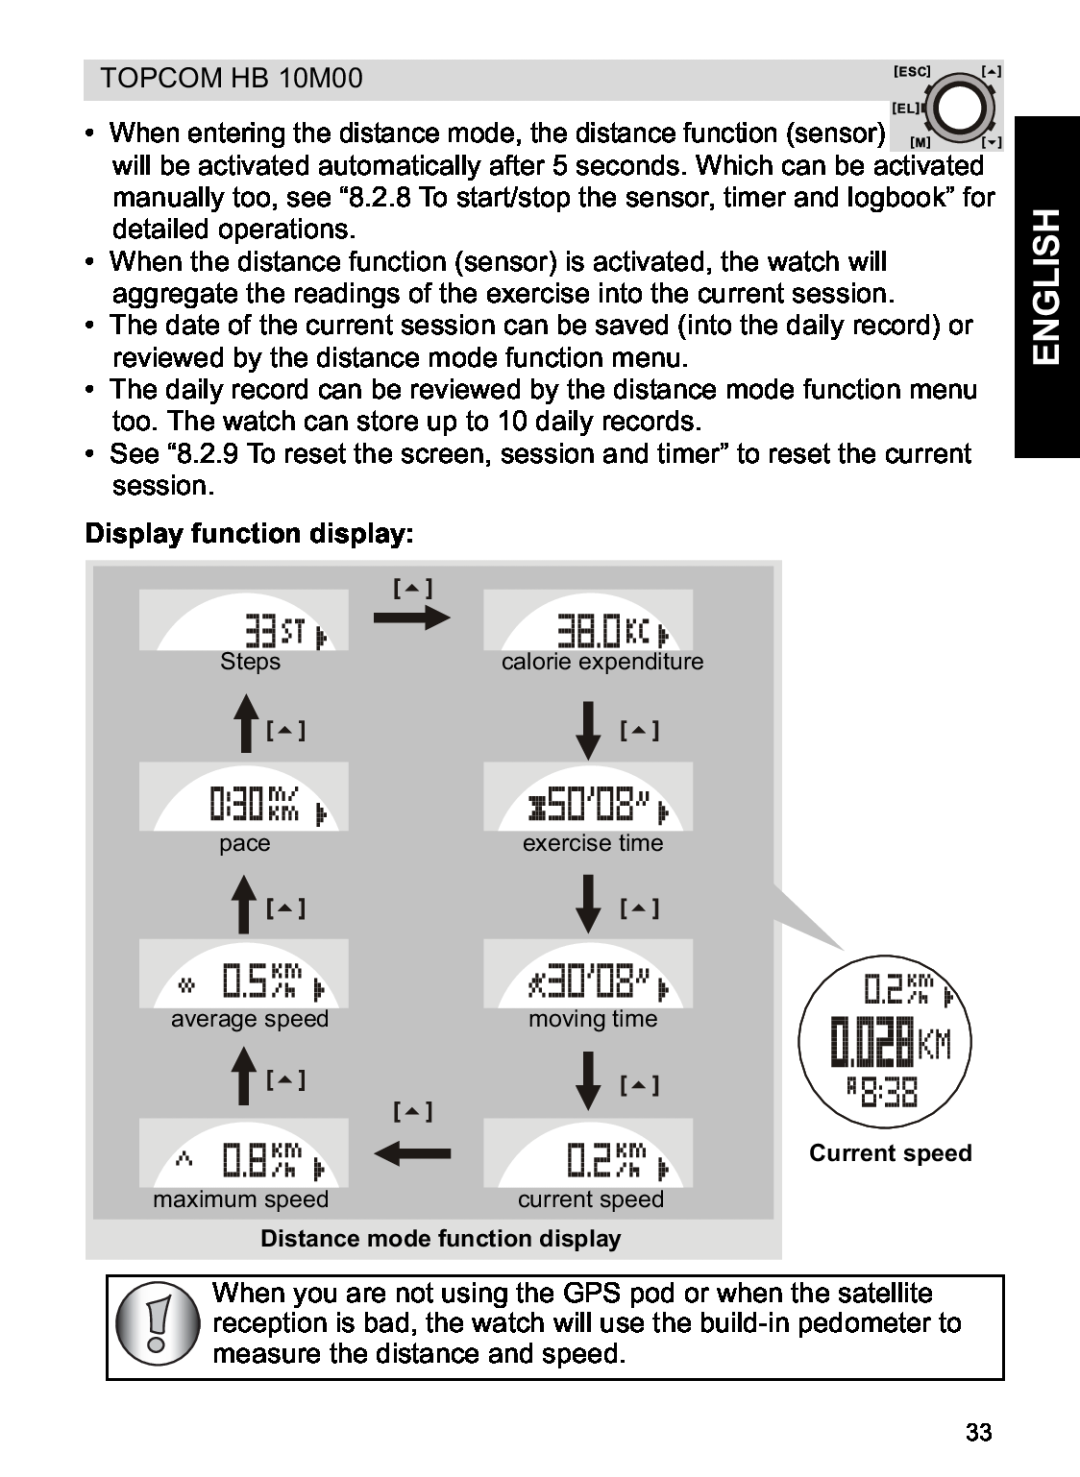 Topcom HB 10M00 manual Display function display, English 